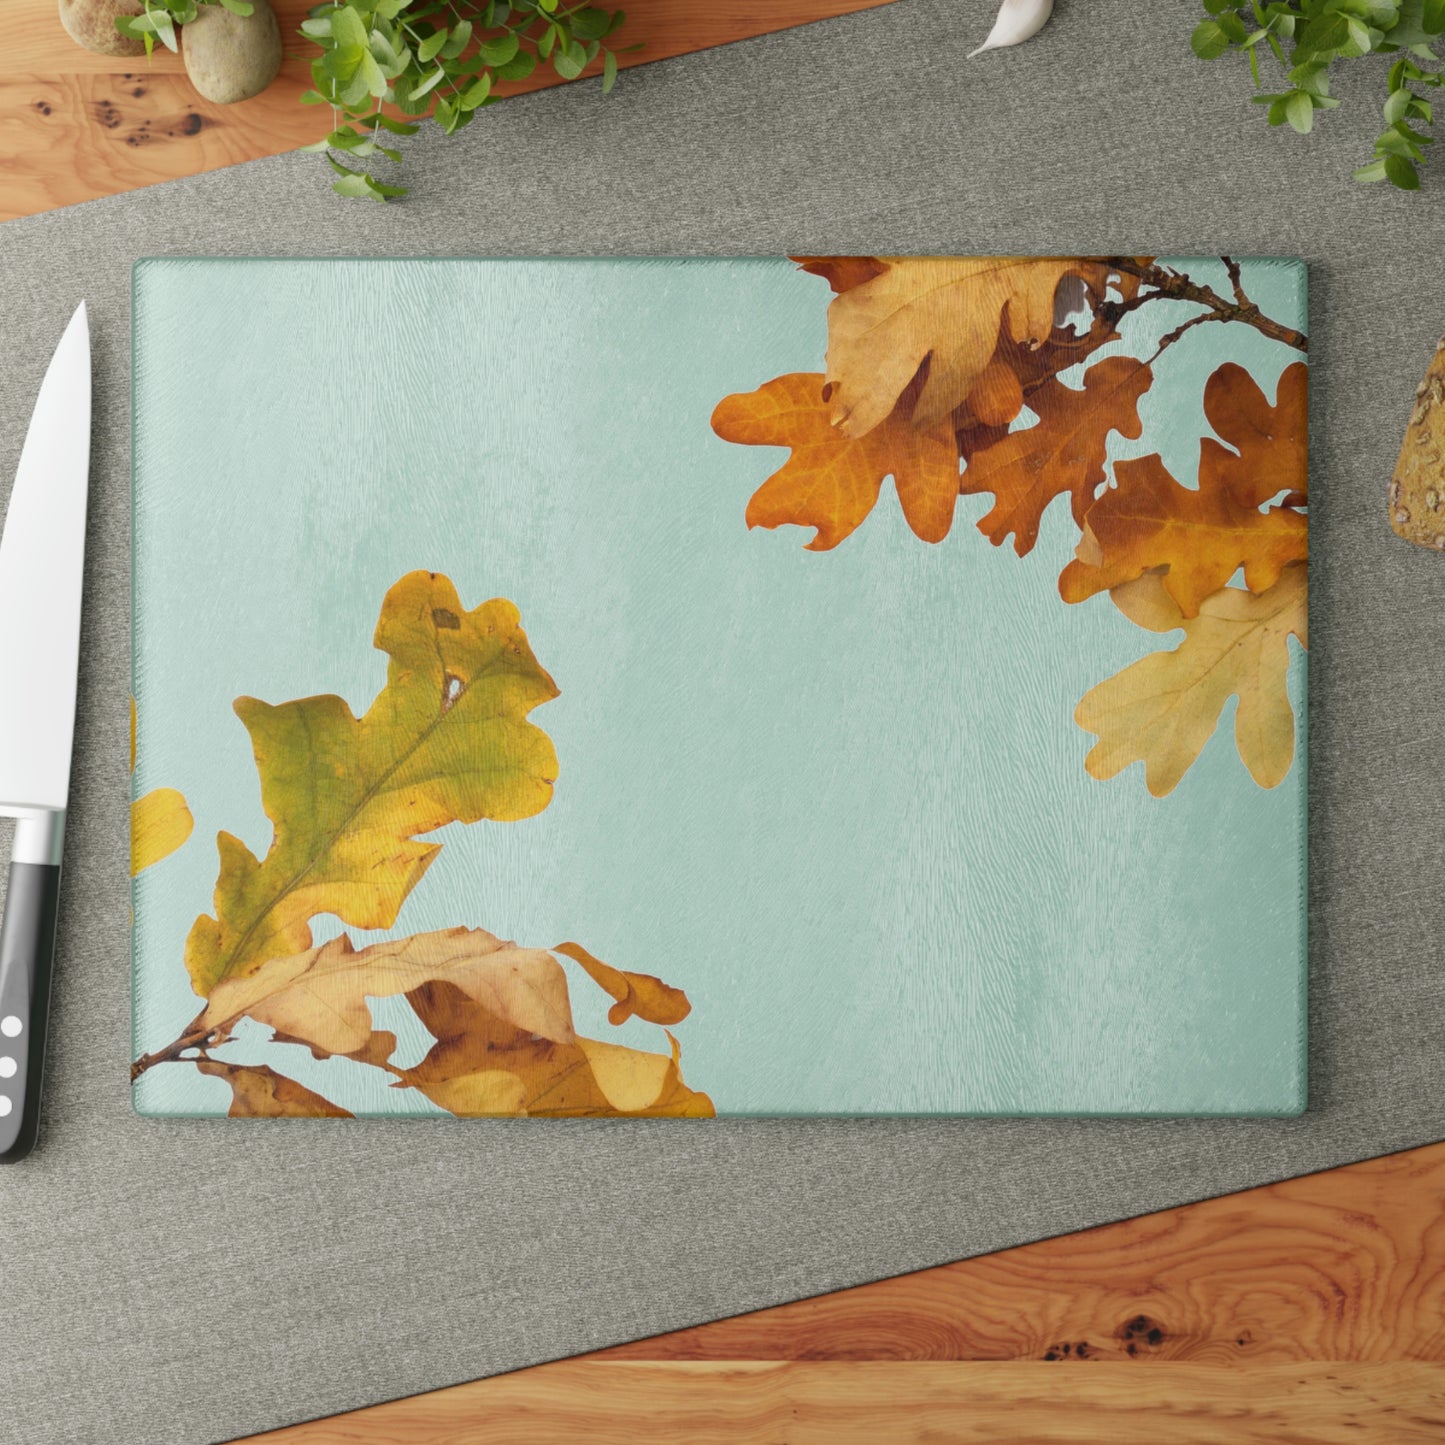 Oak Leaves - Glass Cutting Board / Staklena Daska za Sečenje /